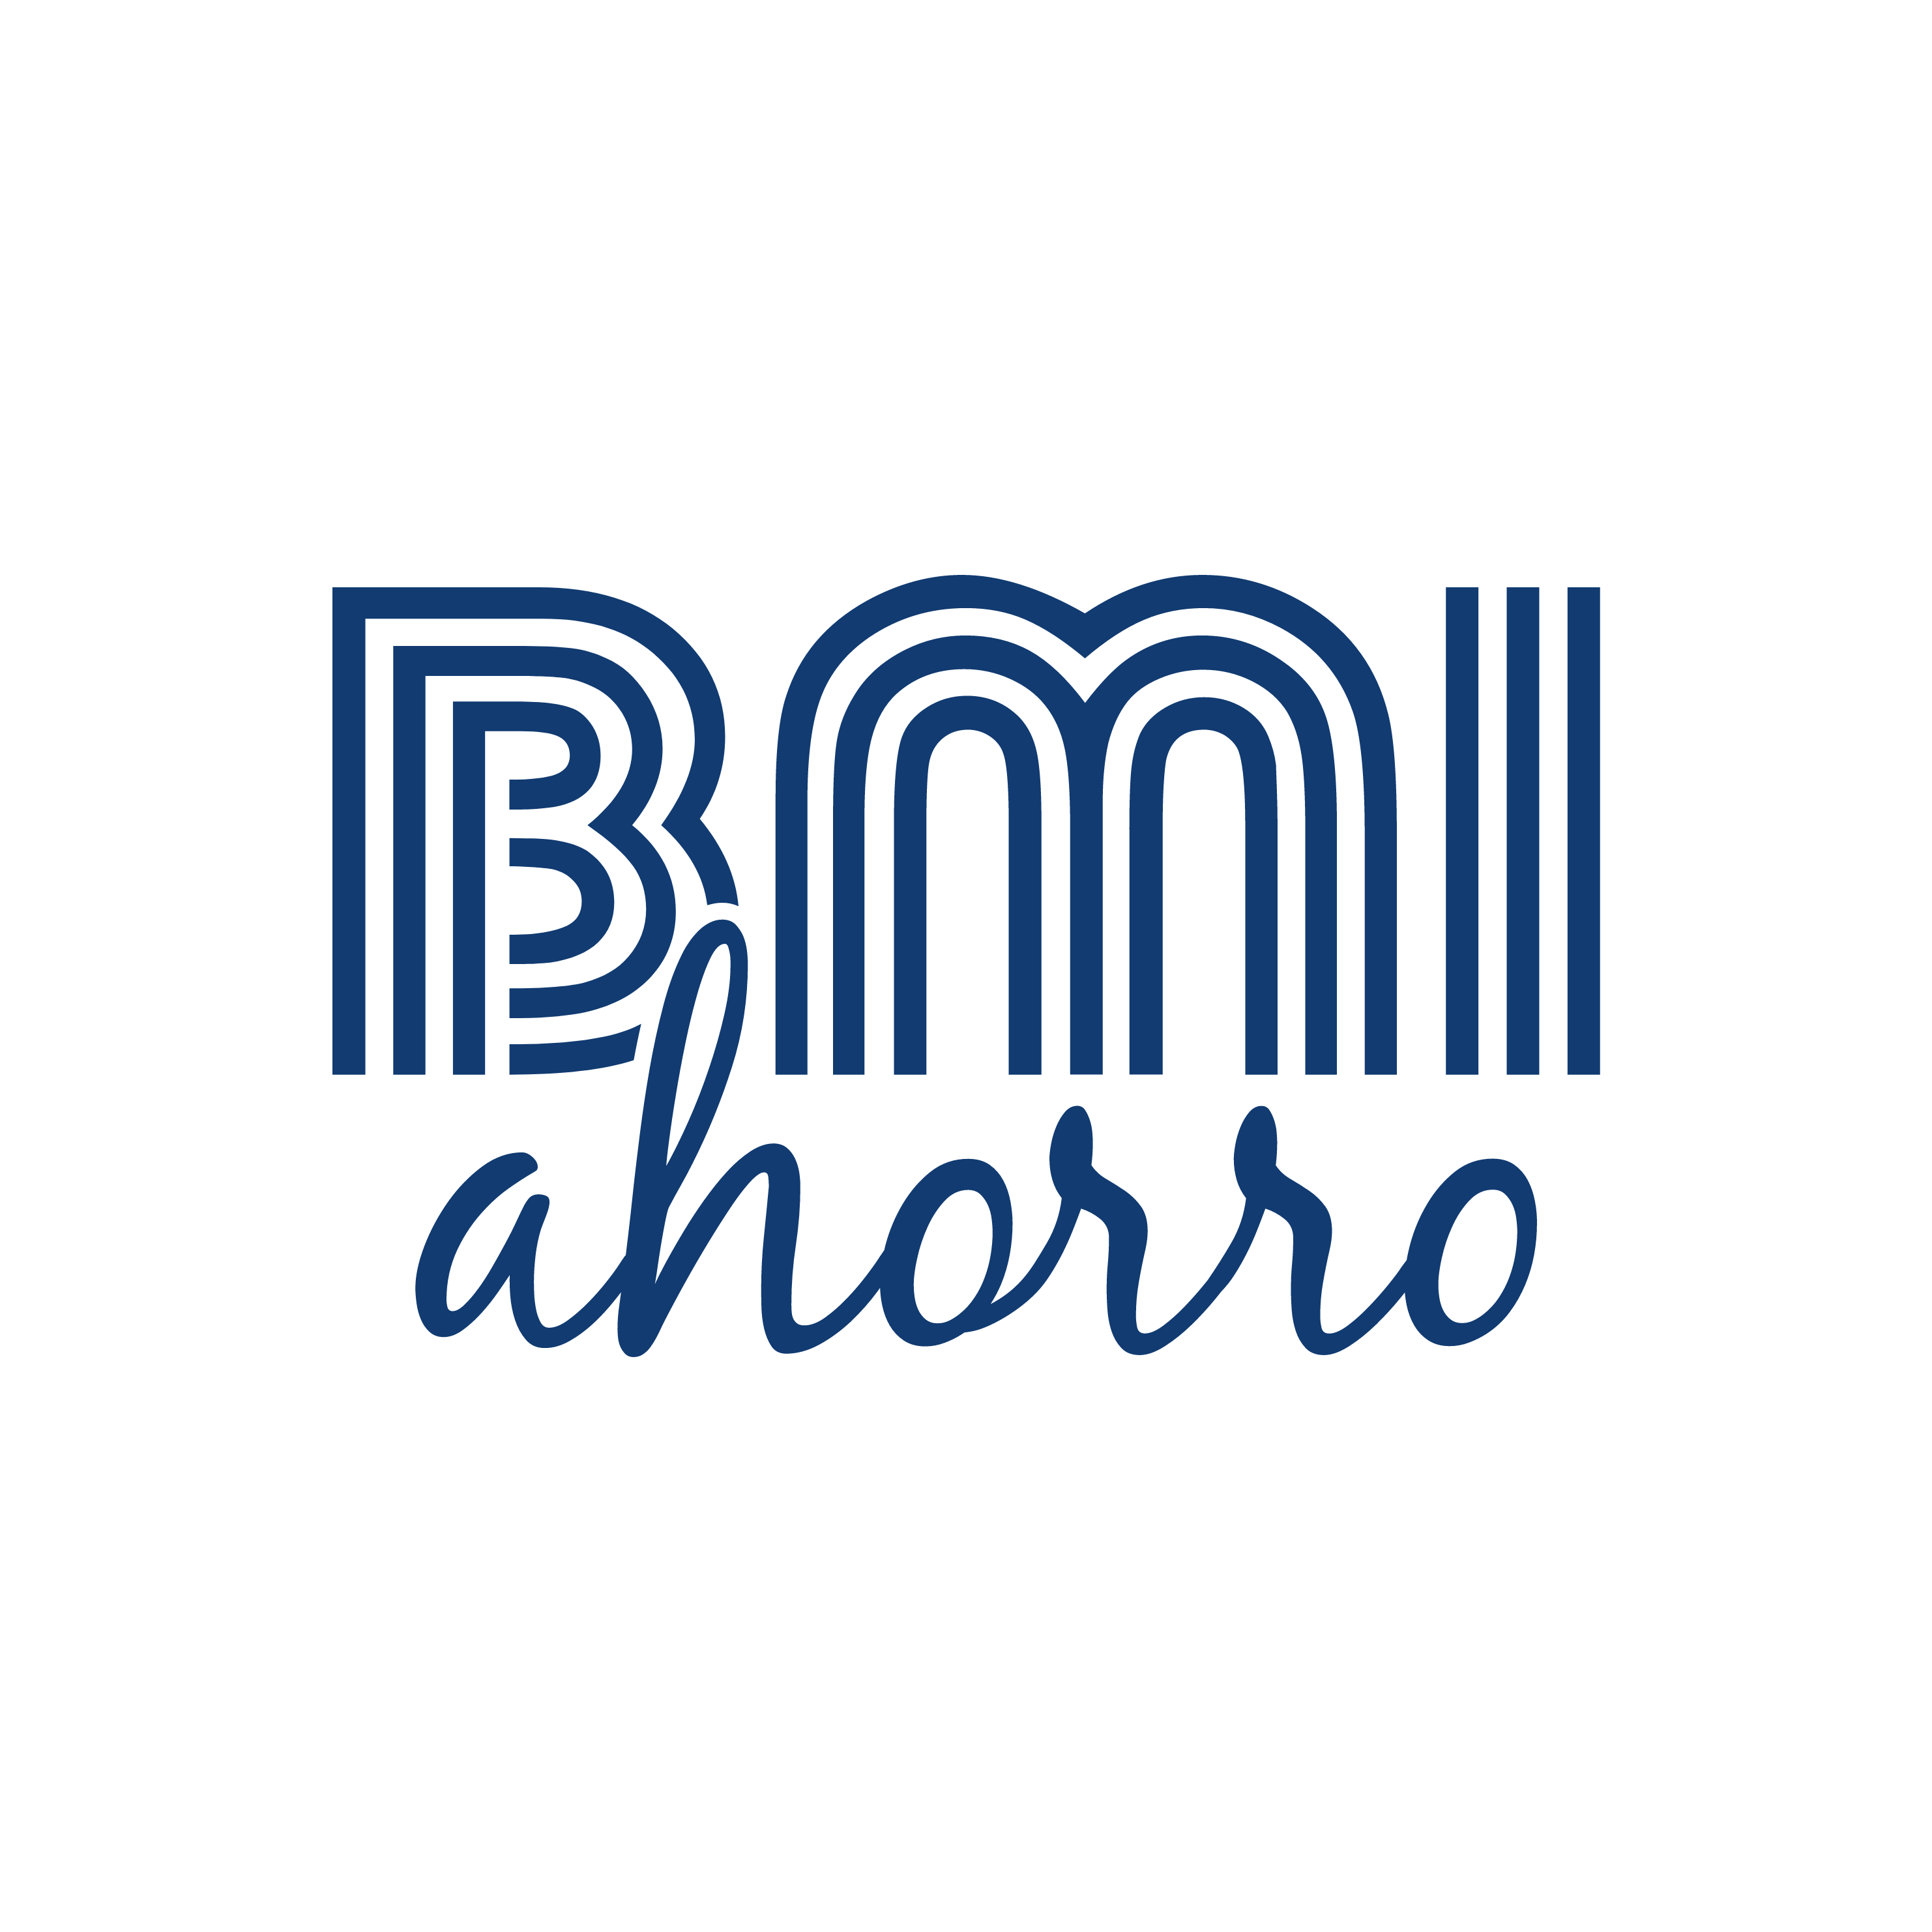 (c) Bmiahorro.com